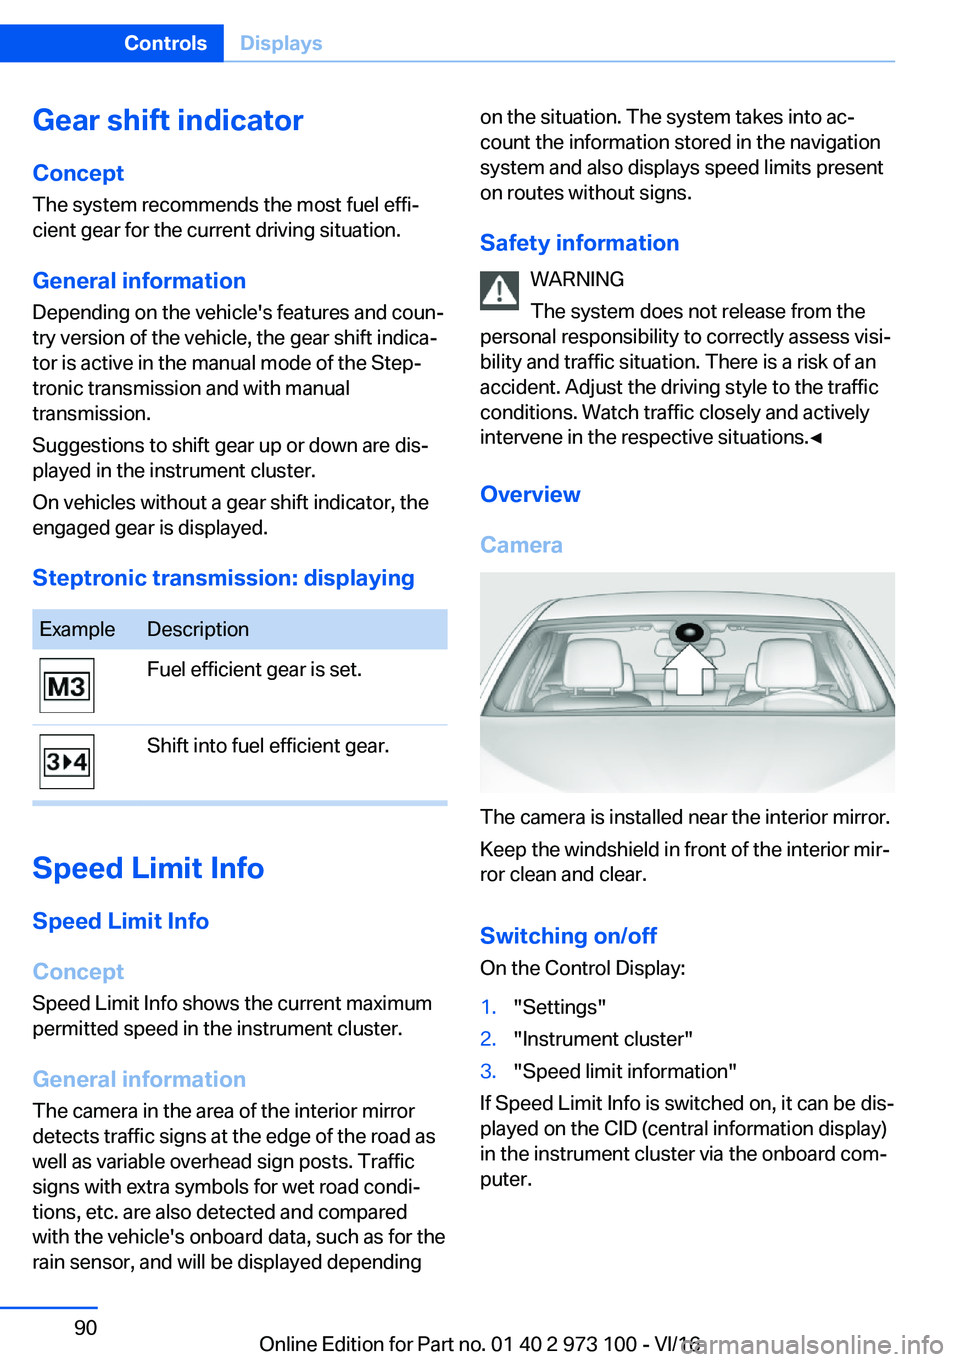 BMW X4 2017 Manual Online �G�e�a�r��s�h�i�f�t��i�n�d�i�c�a�t�o�r�C�o�n�c�e�p�t
�T�h�e� �s�y�s�t�e�m� �r�e�c�o�m�m�e�n�d�s� �t�h�e� �m�o�s�t� �f�u�e�l� �e�f�f�ij
�c�i�e�n�t� �g�e�a�r� �f�o�r� �t�h�e� �c�u�r�r�e�n�t� �d�r�i�v